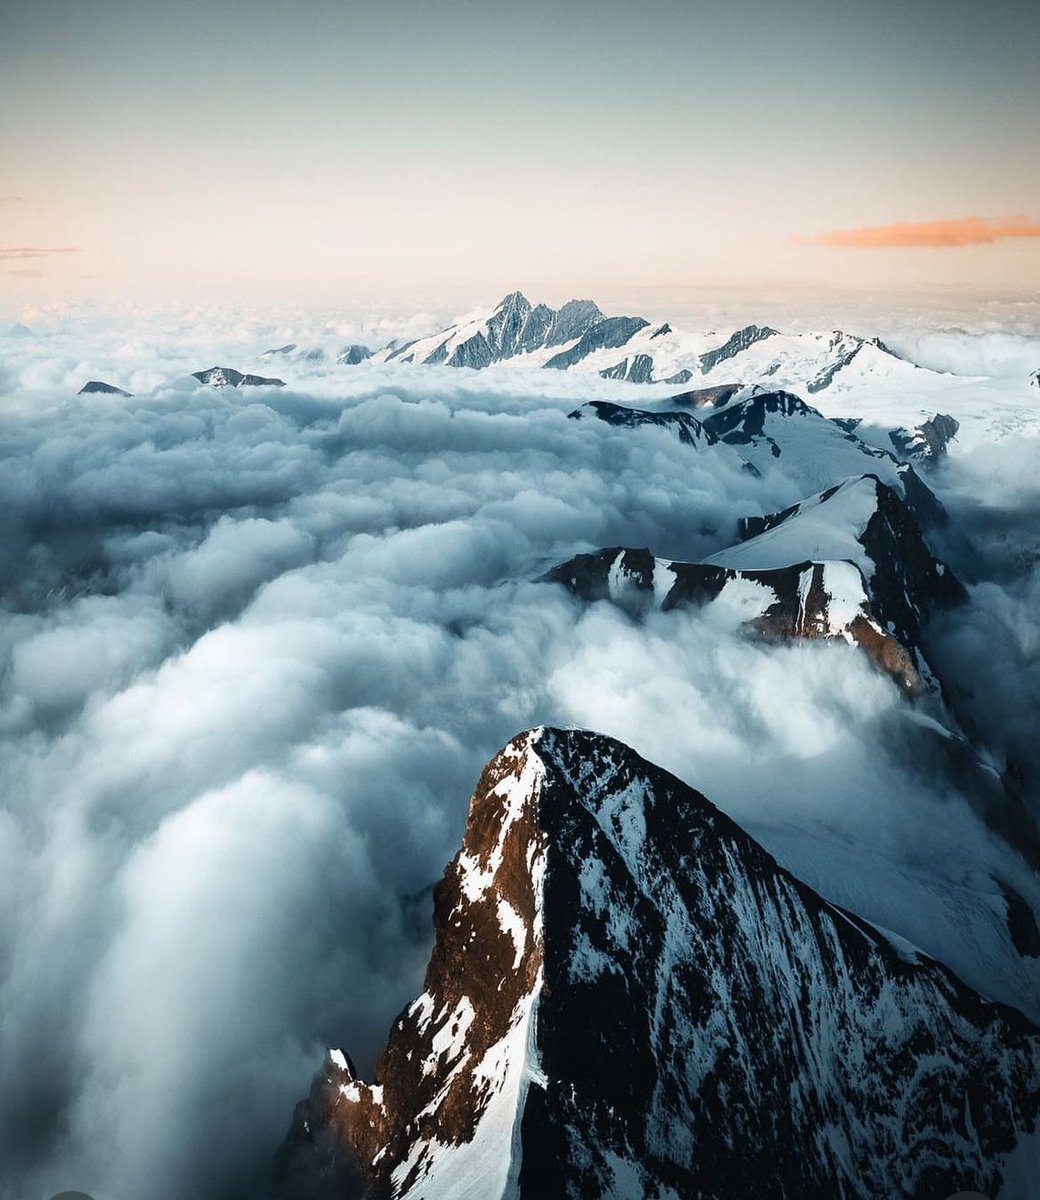 High alpine views in Austria 🇦🇹